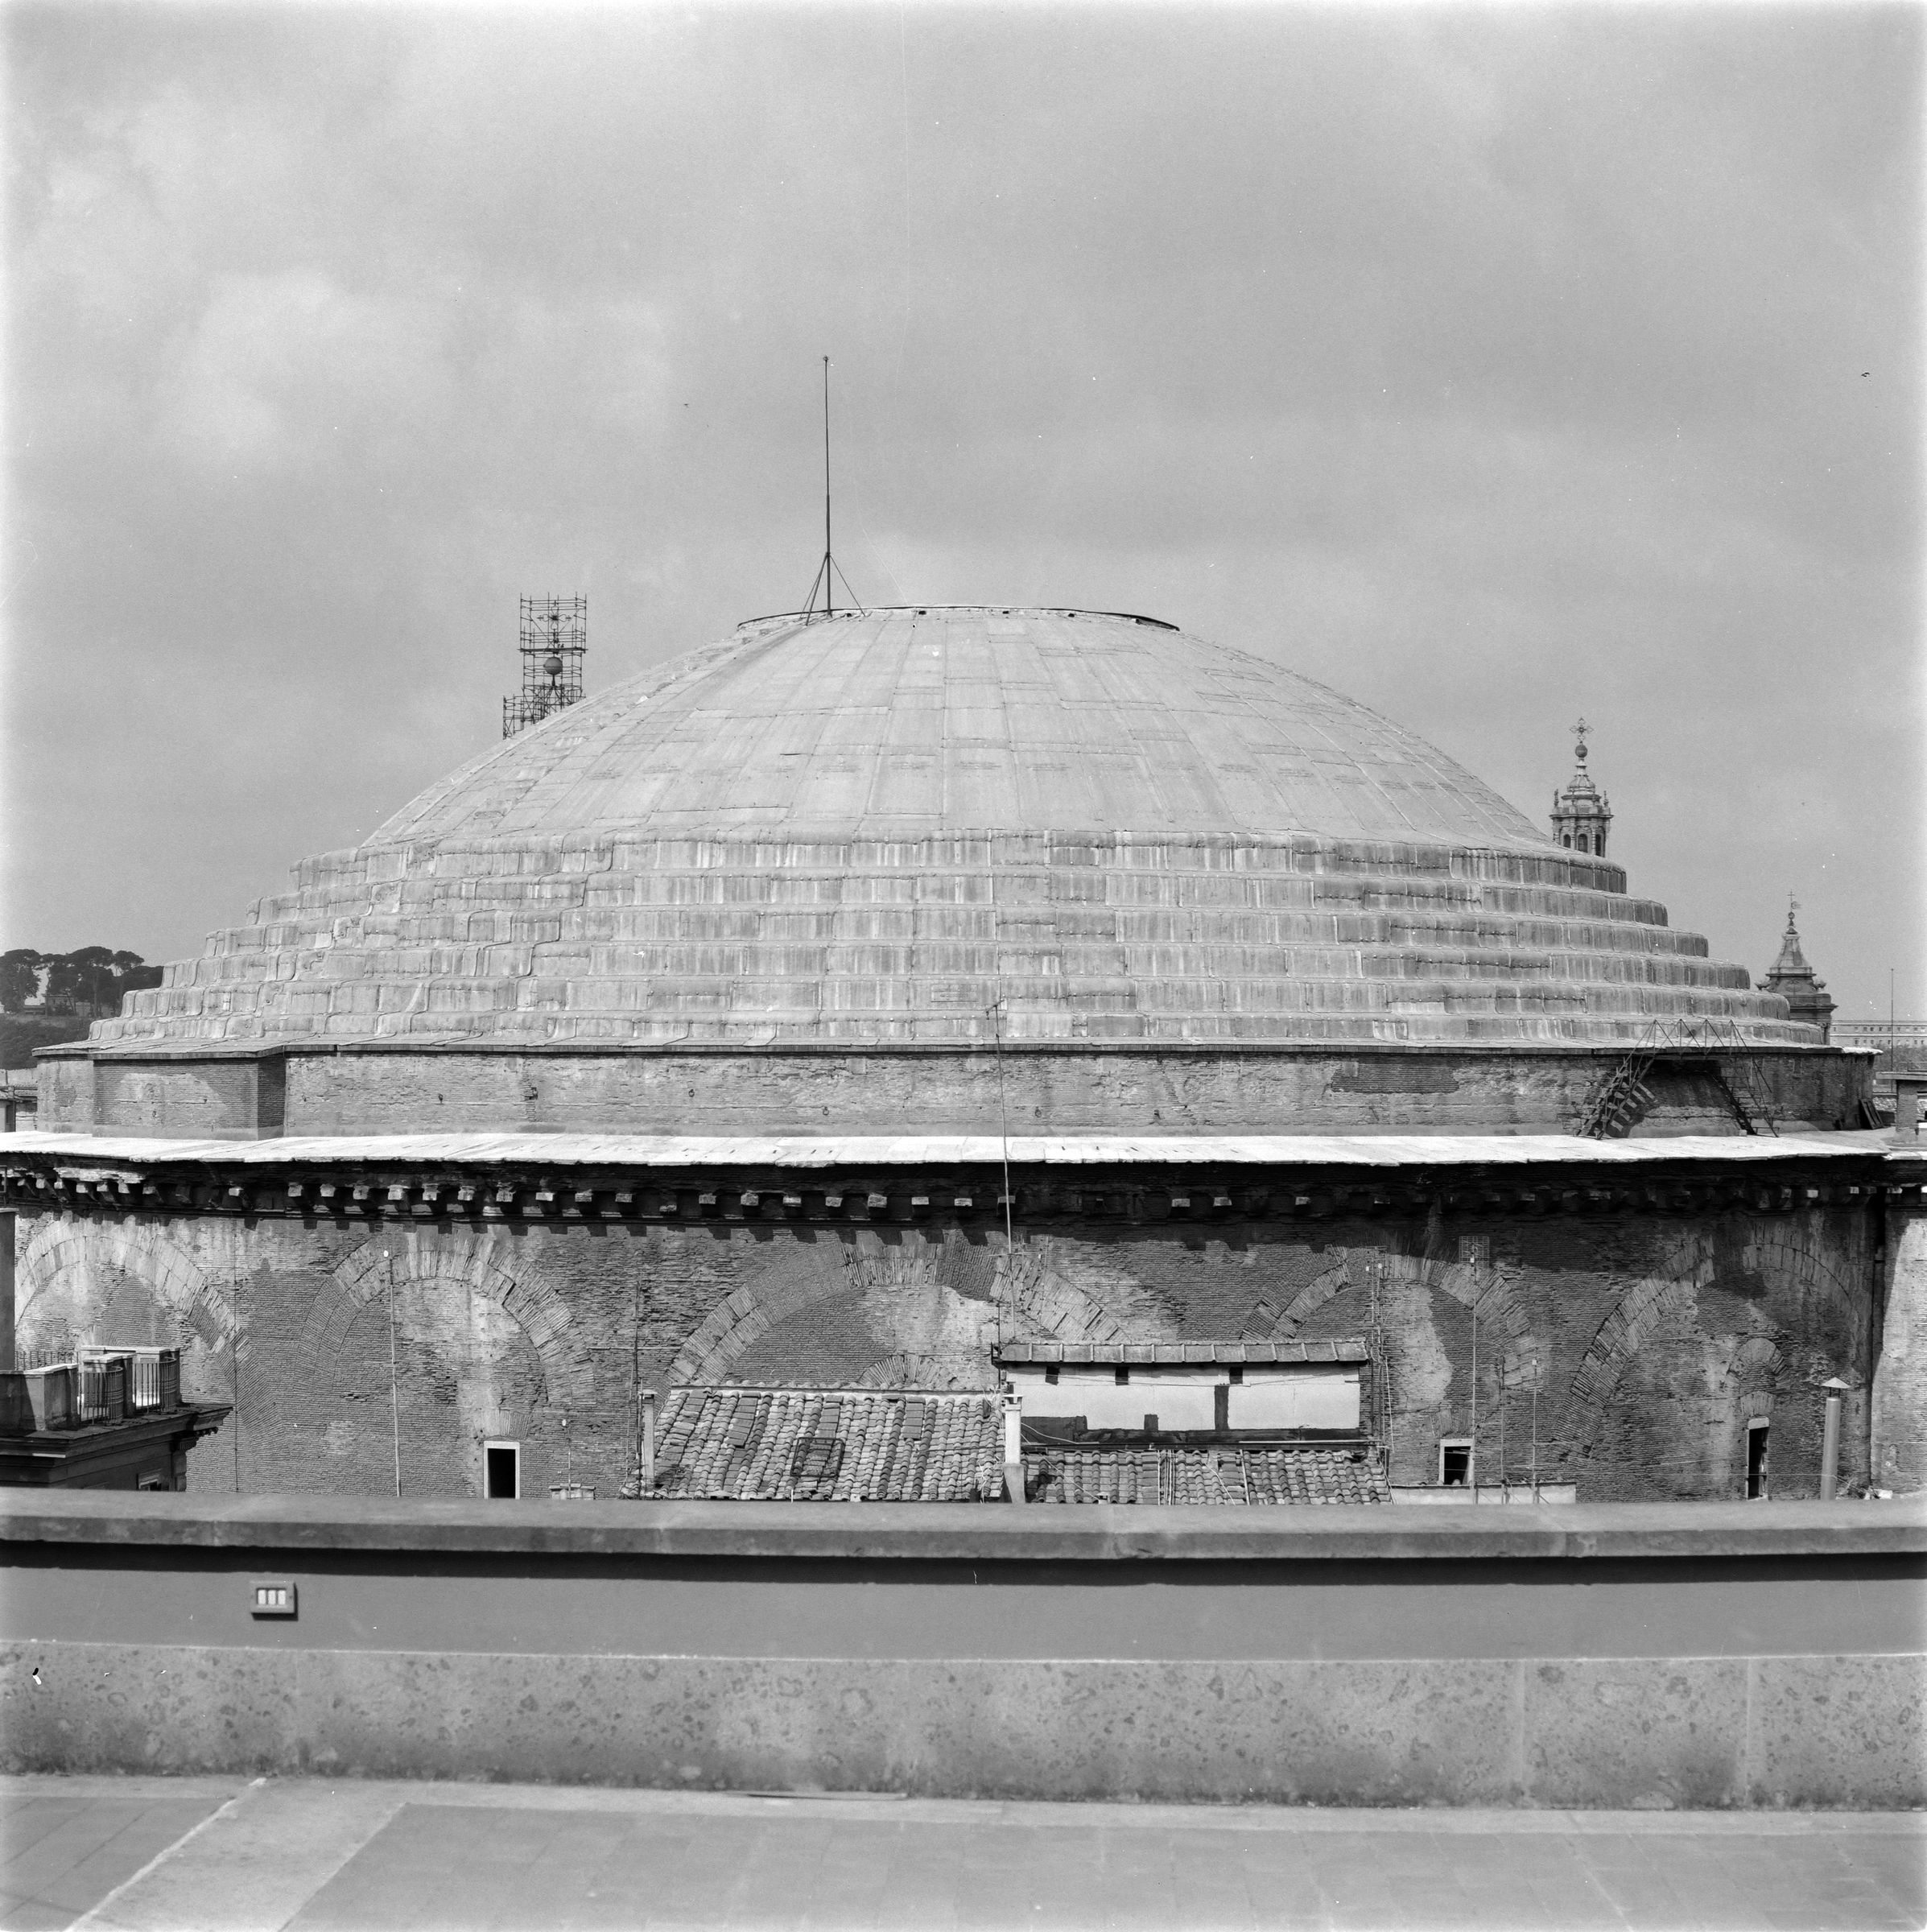 Fotografo non identificato, Pantheon; Pantheon (Chiesa di S. Maria ad Martyres), 1951-2000, gelatina ai sali d'argento, 6x6 cm, N078305